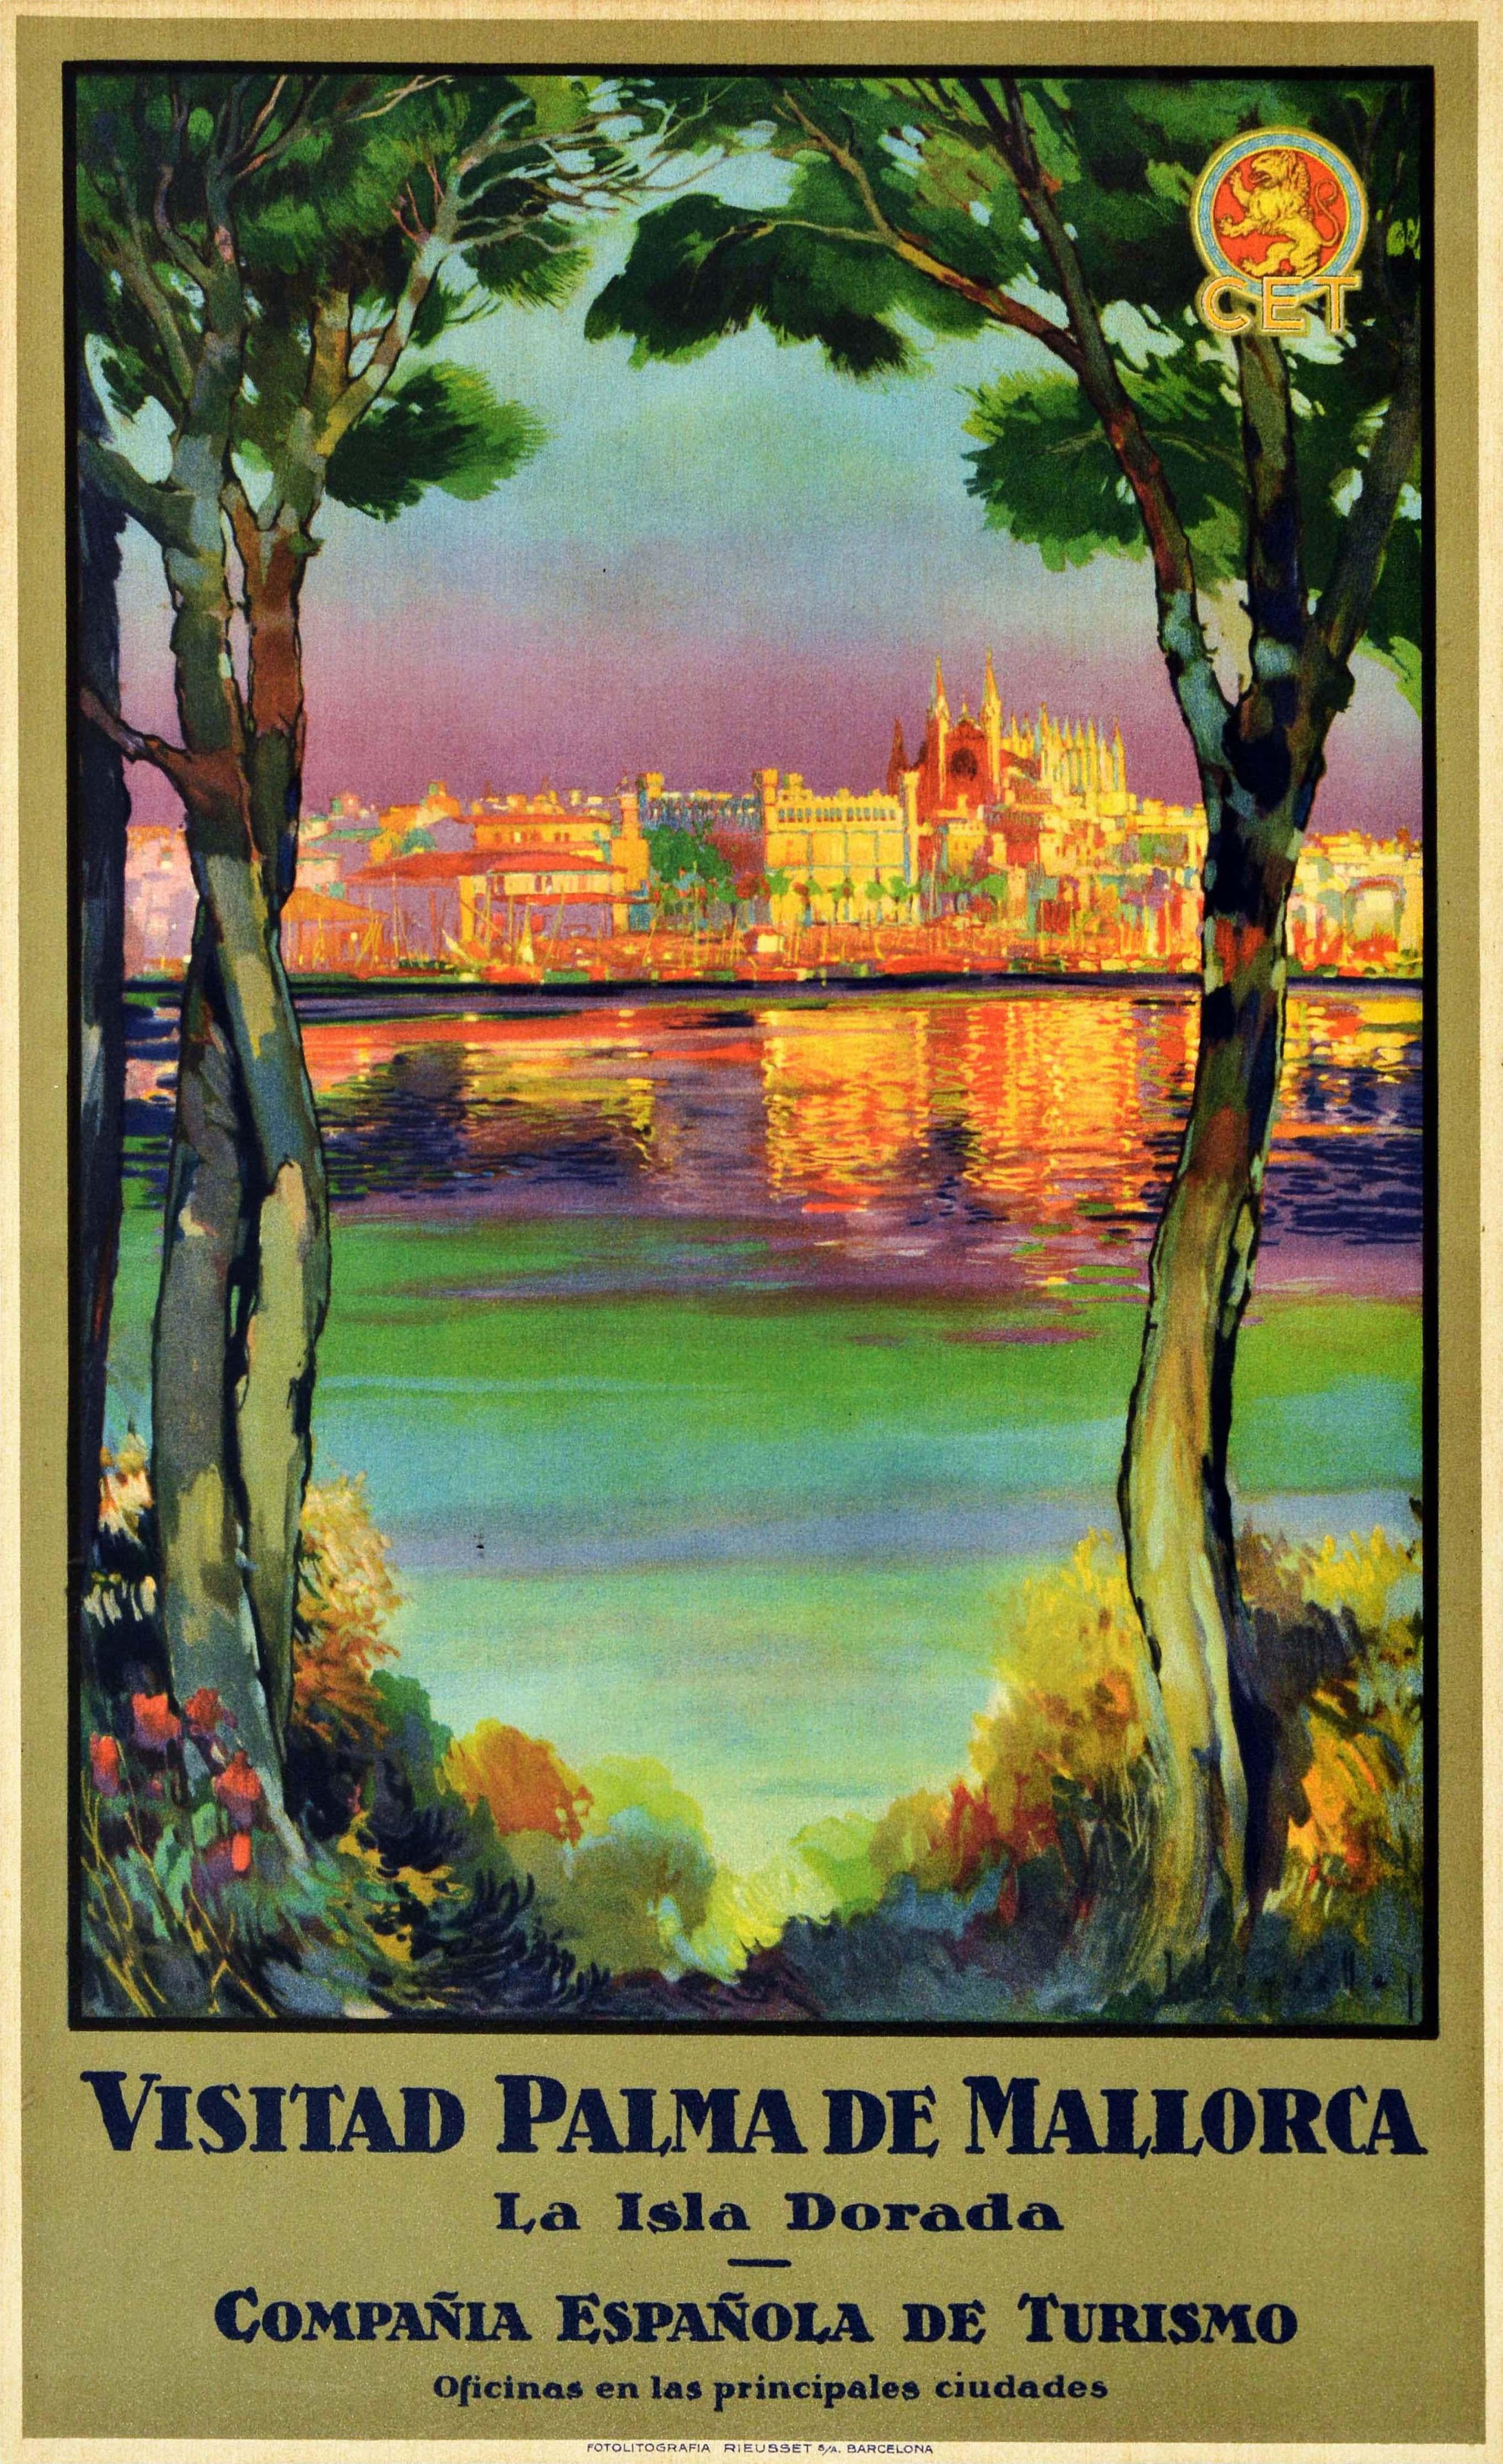 J. Segrelles Print - Original Vintage Travel Poster Visitad Palma De Mallorca Balearic Island Majorca